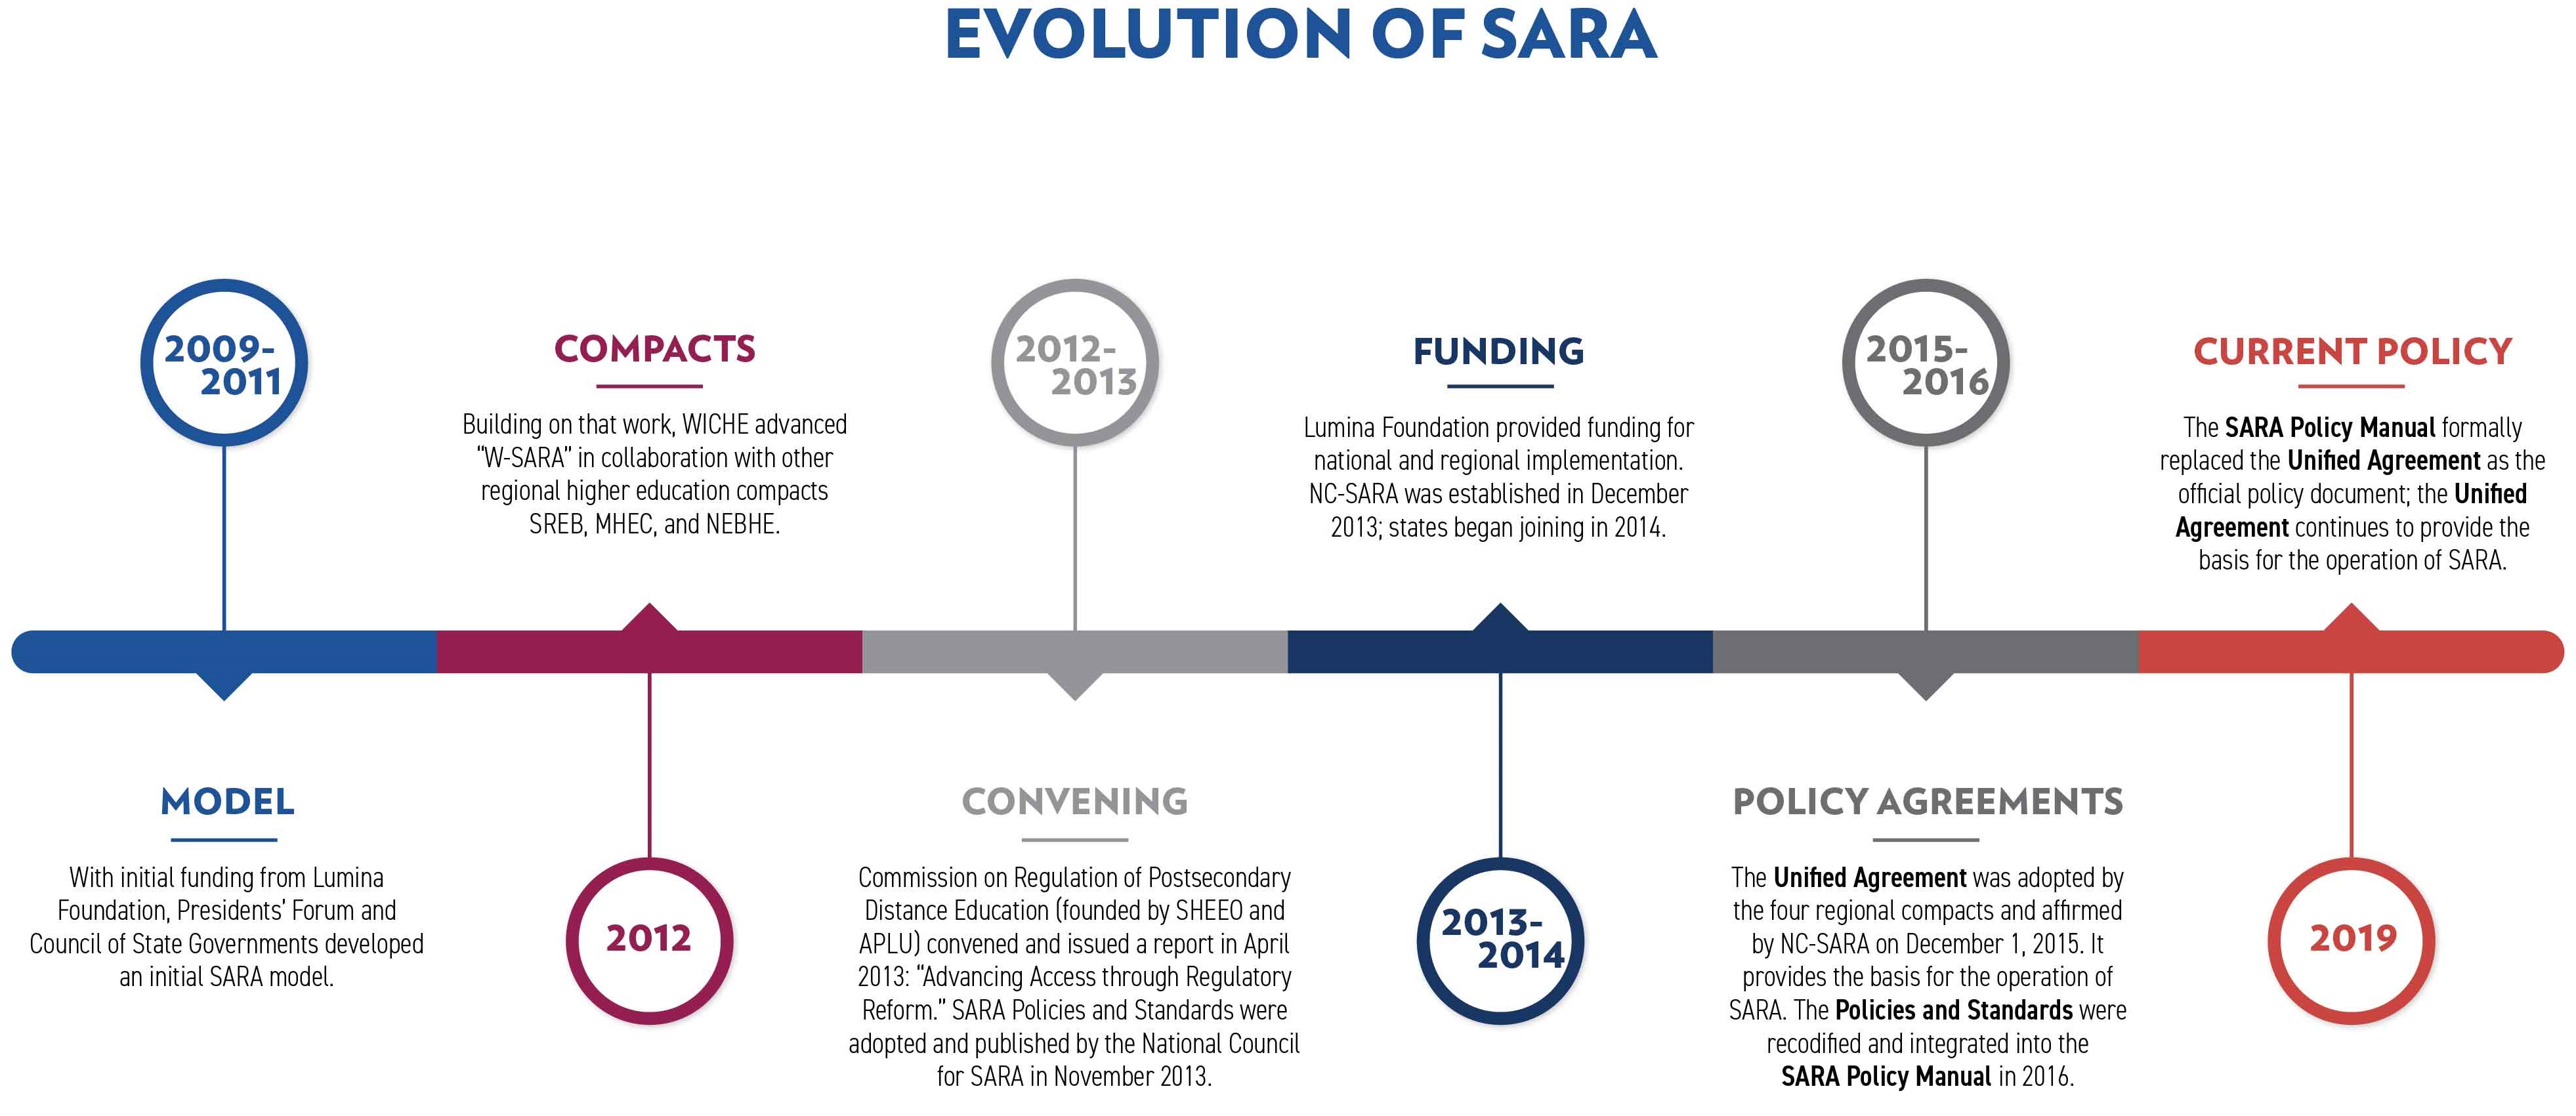 Evolution of SARA